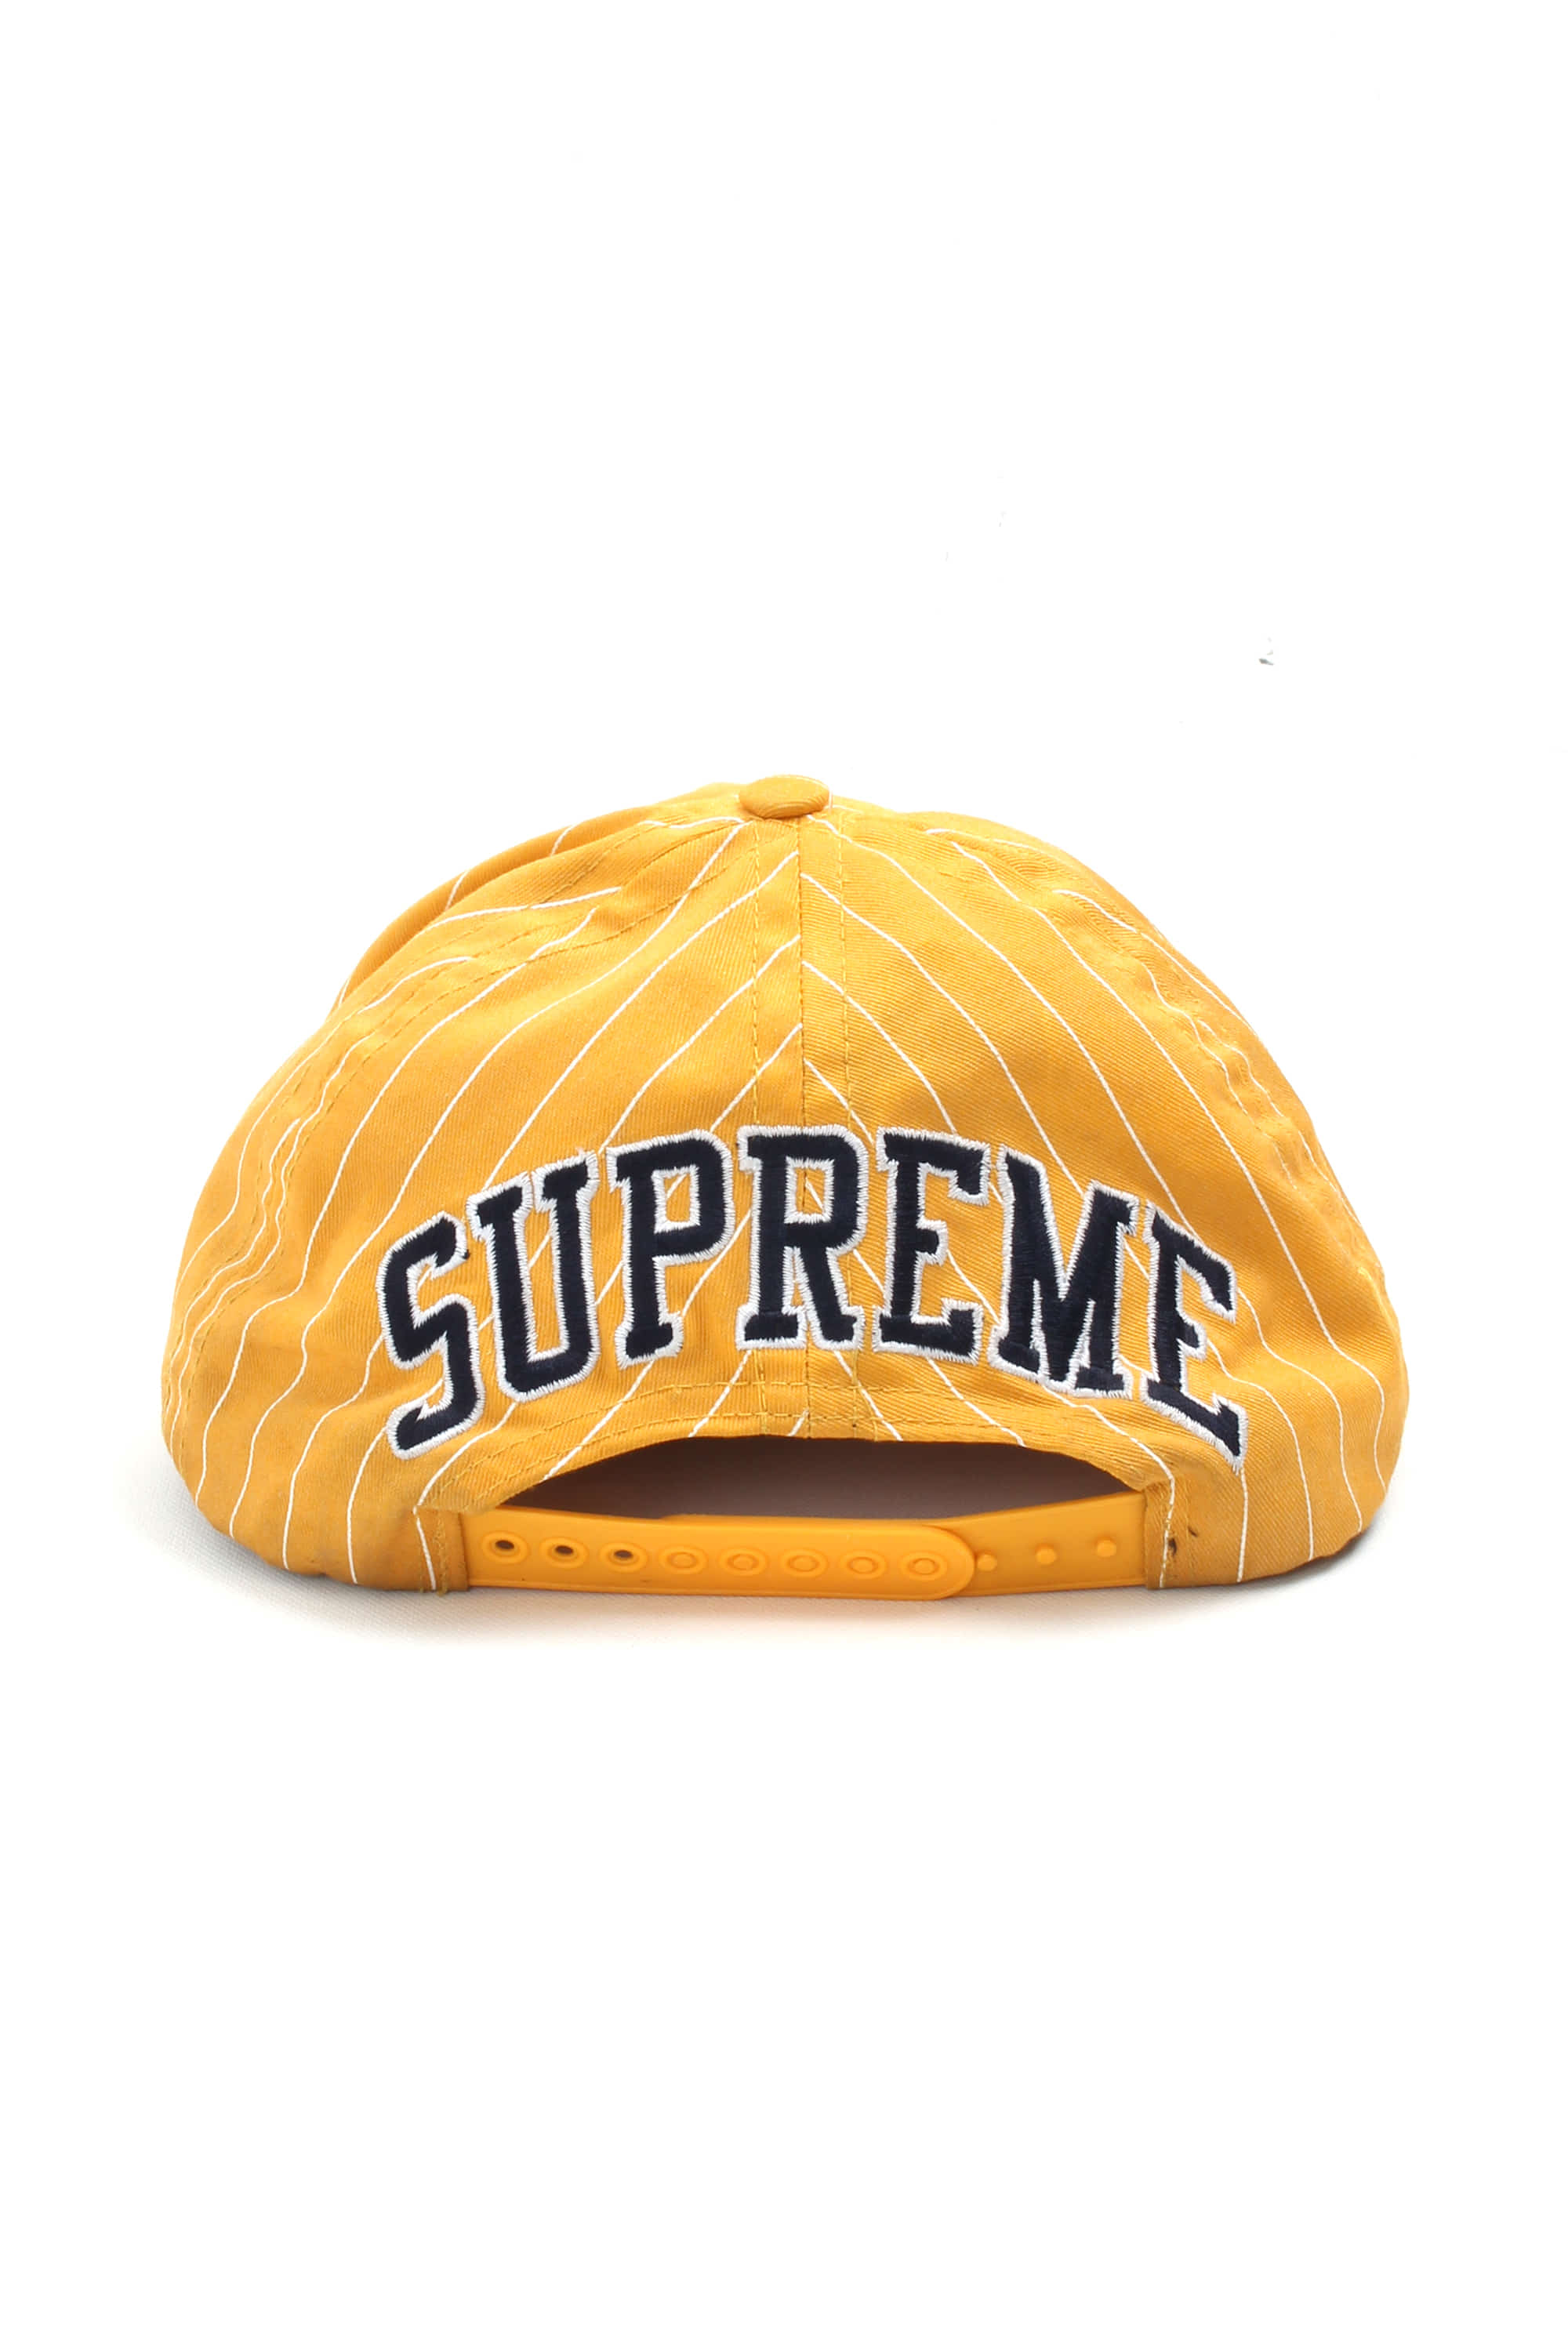 SUPREME Ball Cap